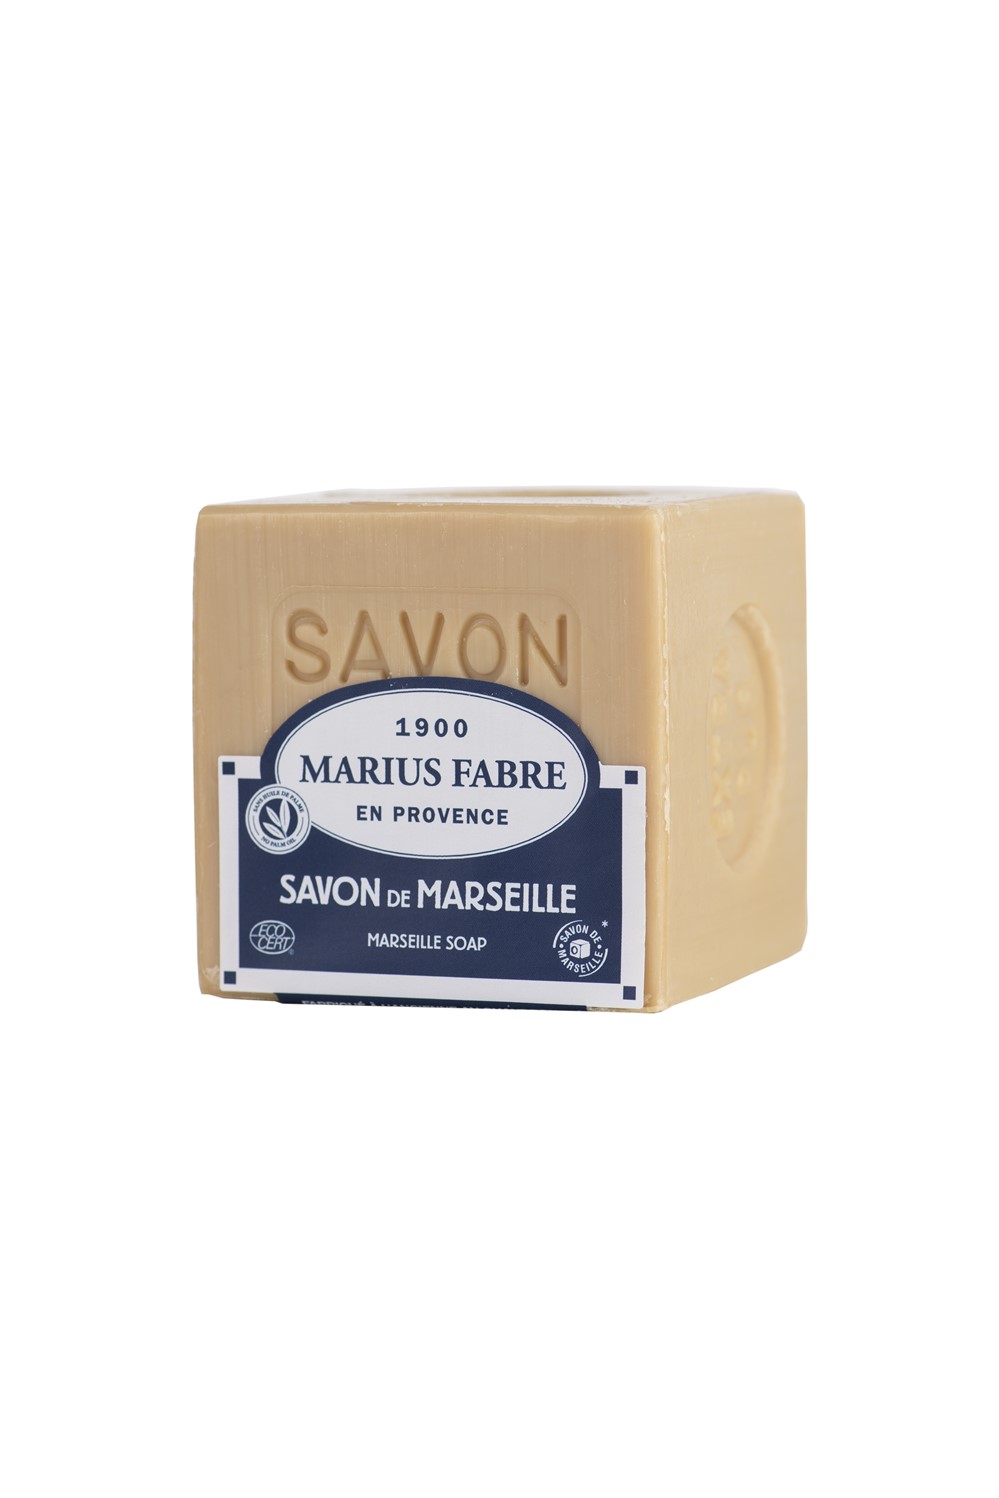 Savon de Marseille blanc 400 g - MARIUS FABRE